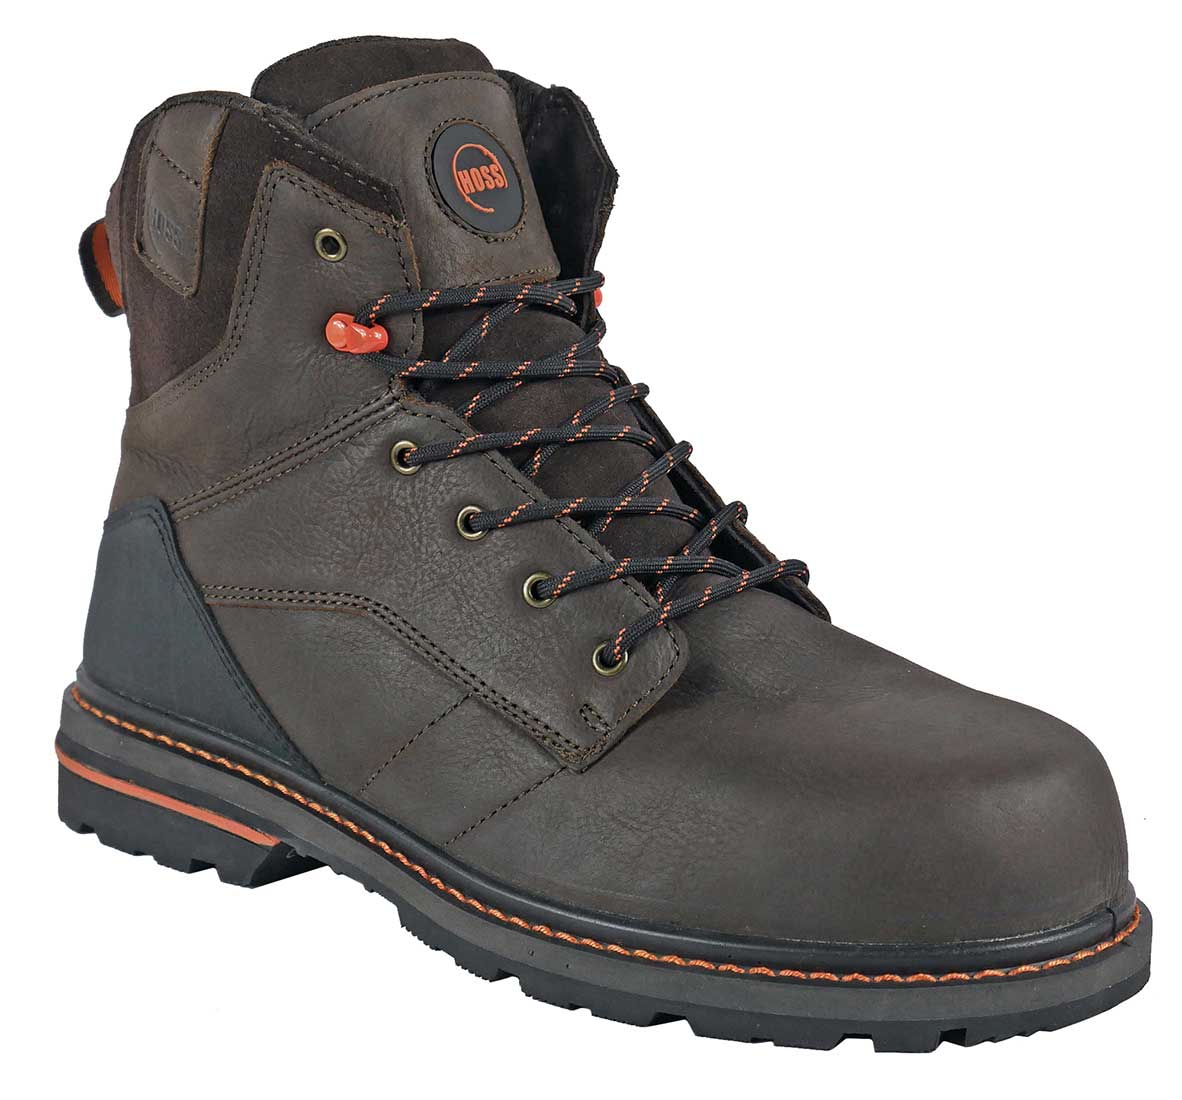 Hoss Carson 60413 Men's 6 Composite Toe Slip & Oil Resistant Work Boot - Extra Wide - Extra Depth